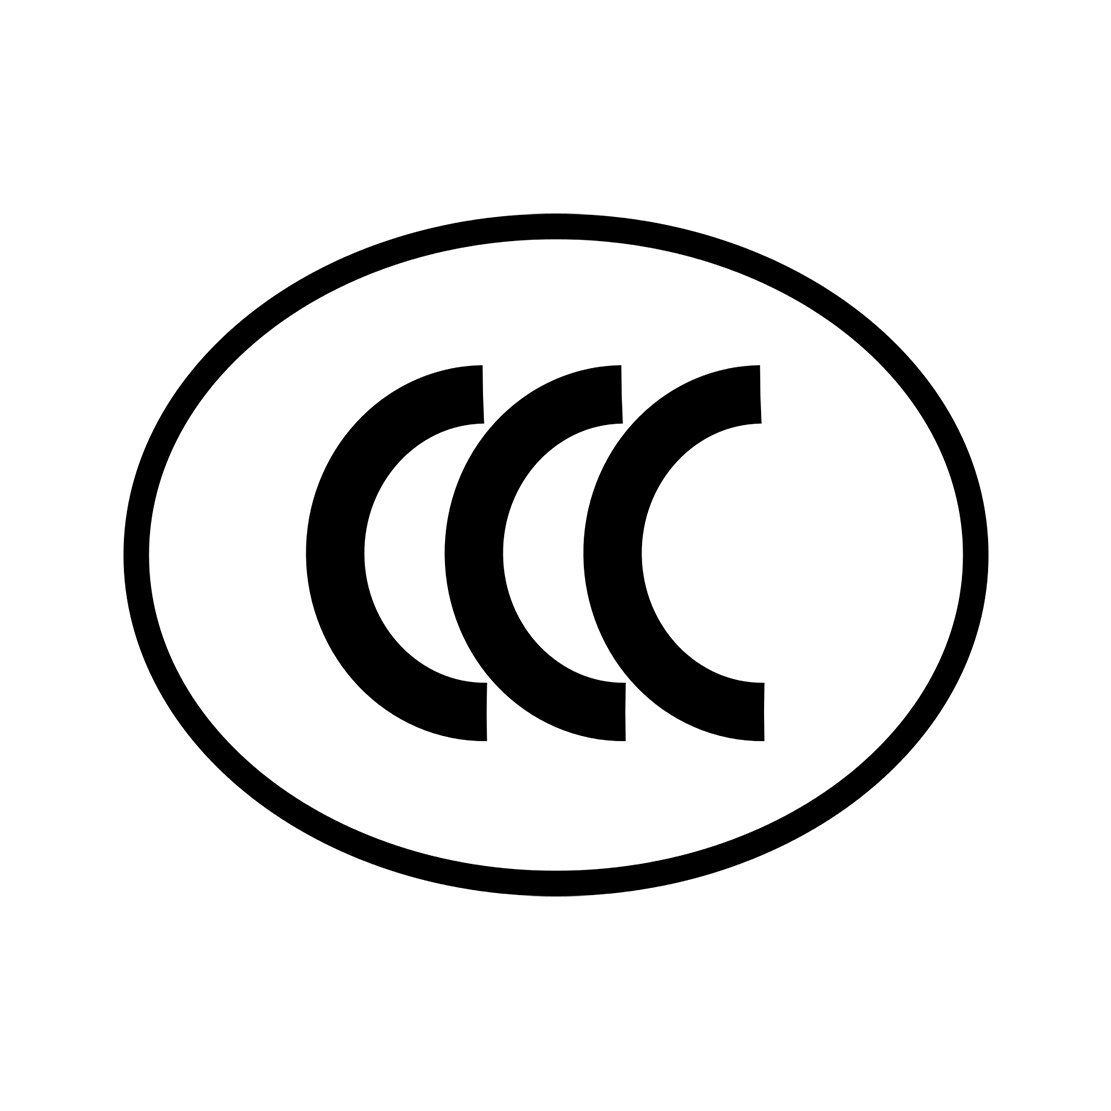 CCC Mark – China